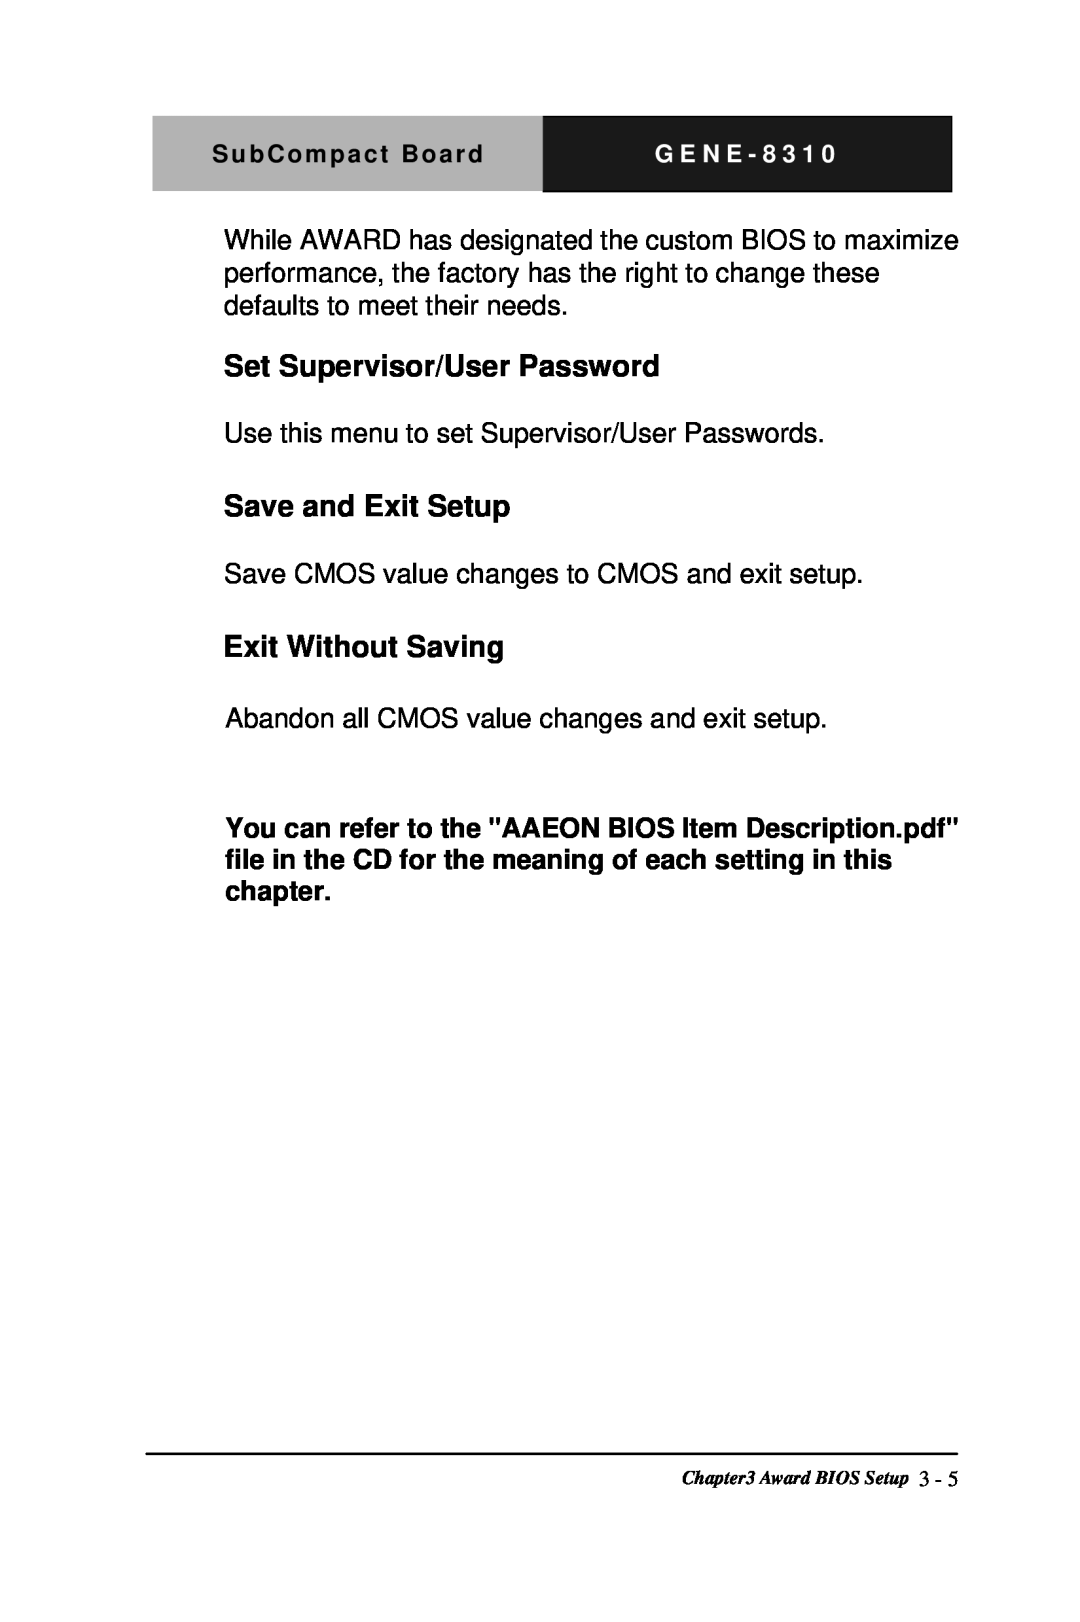 Intel GENE-8310 manual Set Supervisor/User Password, Save and Exit Setup, Exit Without Saving 